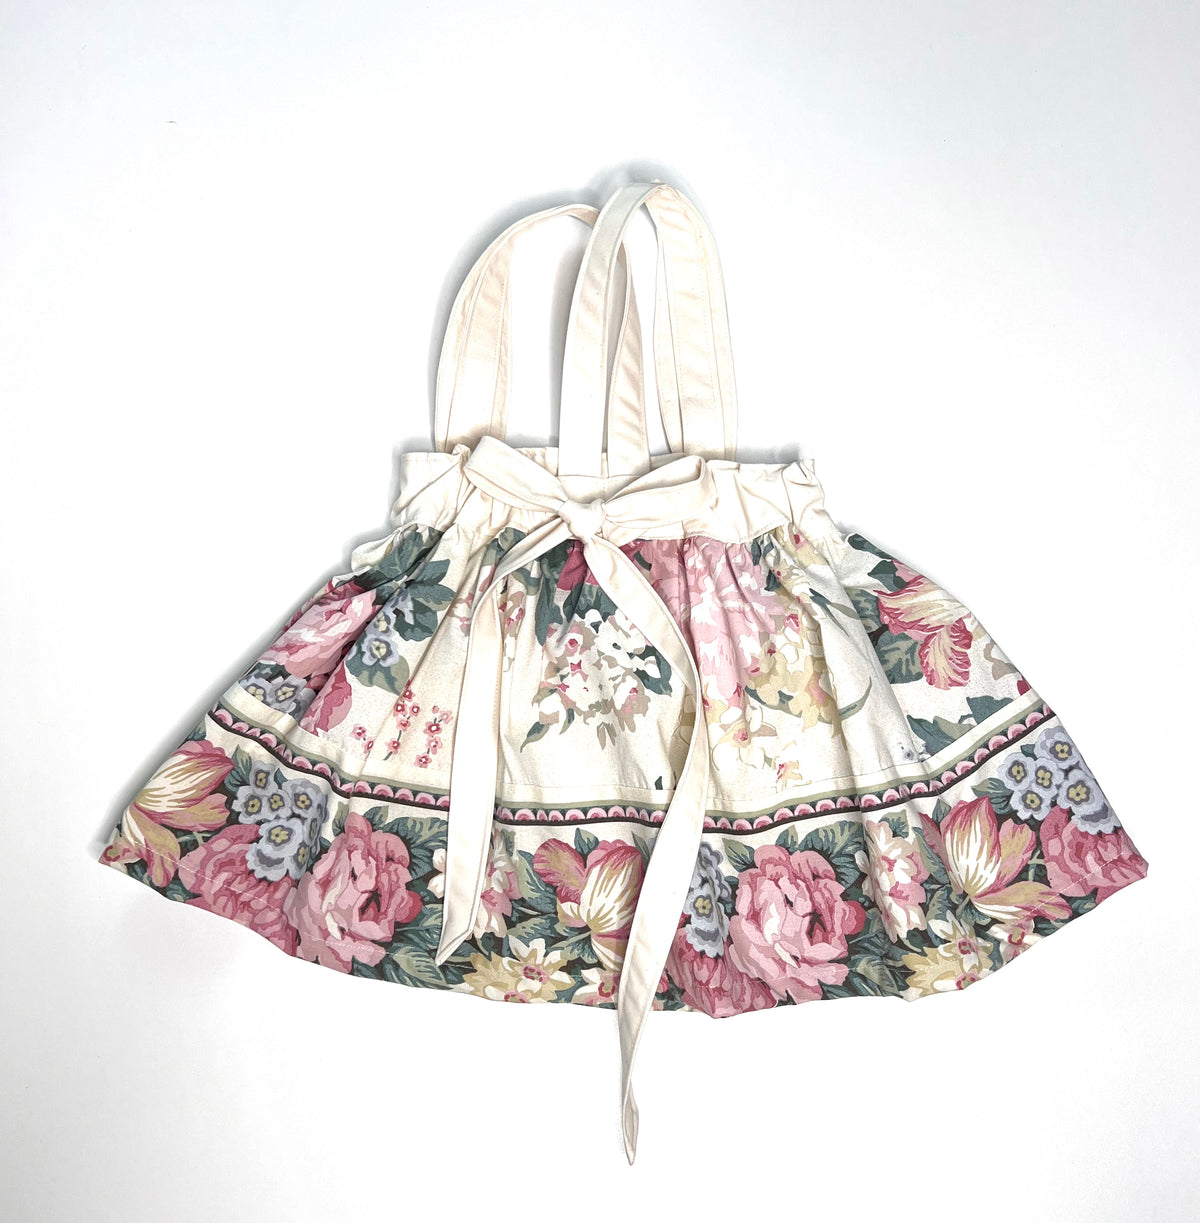 ‘Bunny’ Savannah Suspender Skirt - Rose Border Reclaimed  - Ready to Ship